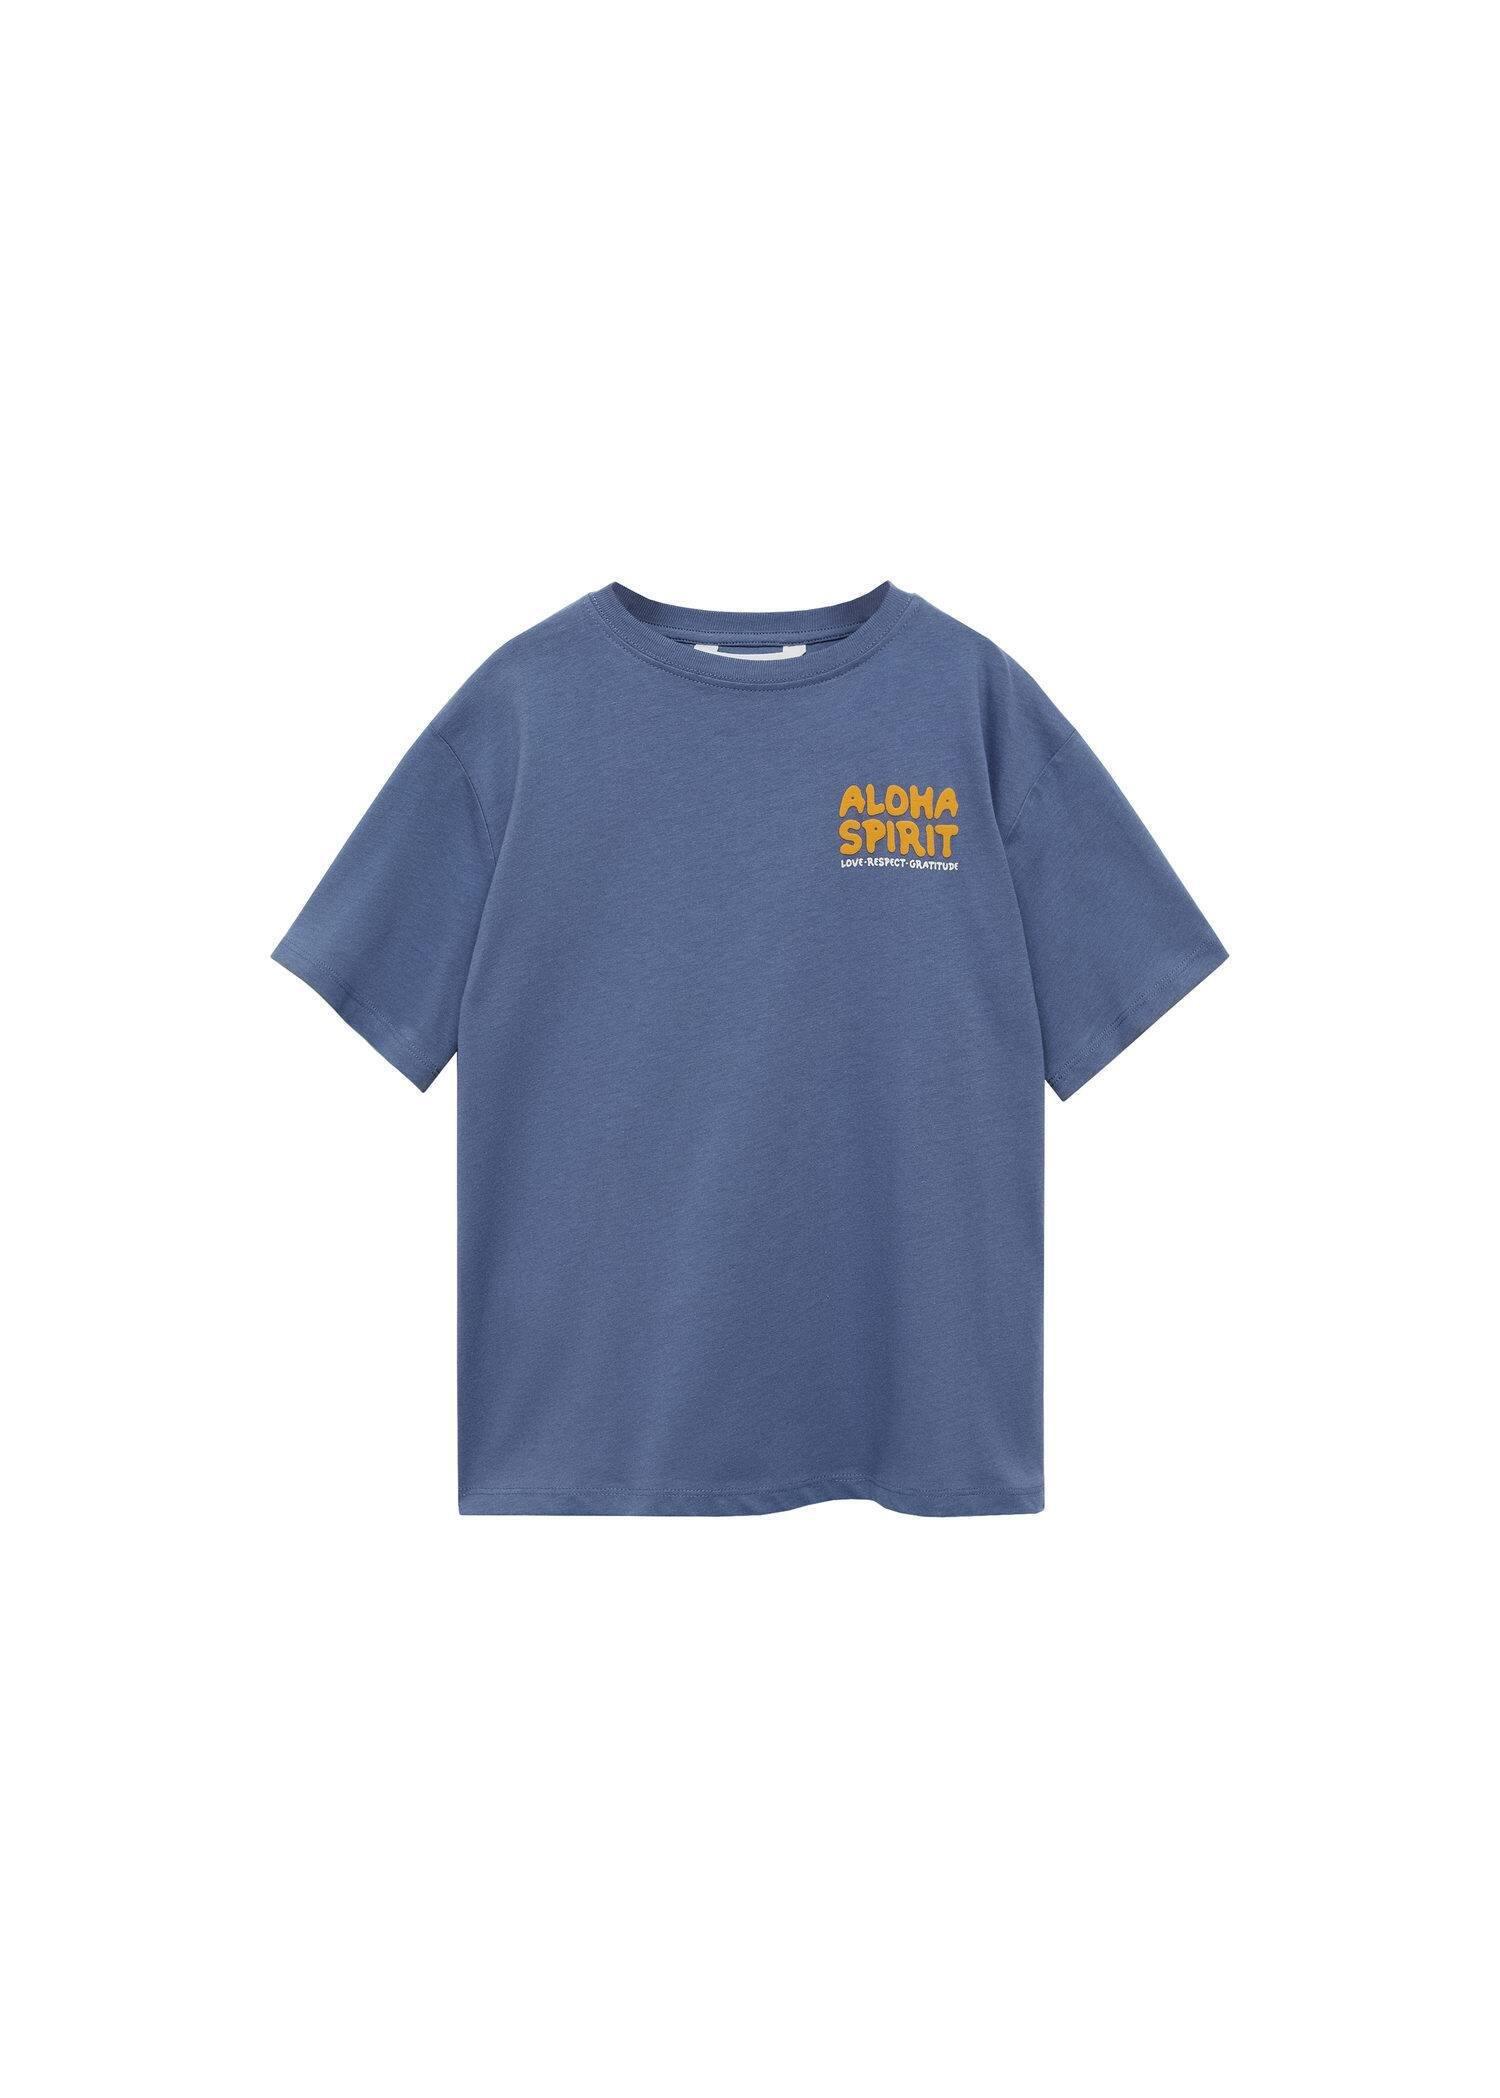 Mango - Blue Printed Message T-Shirt, Kids Boys